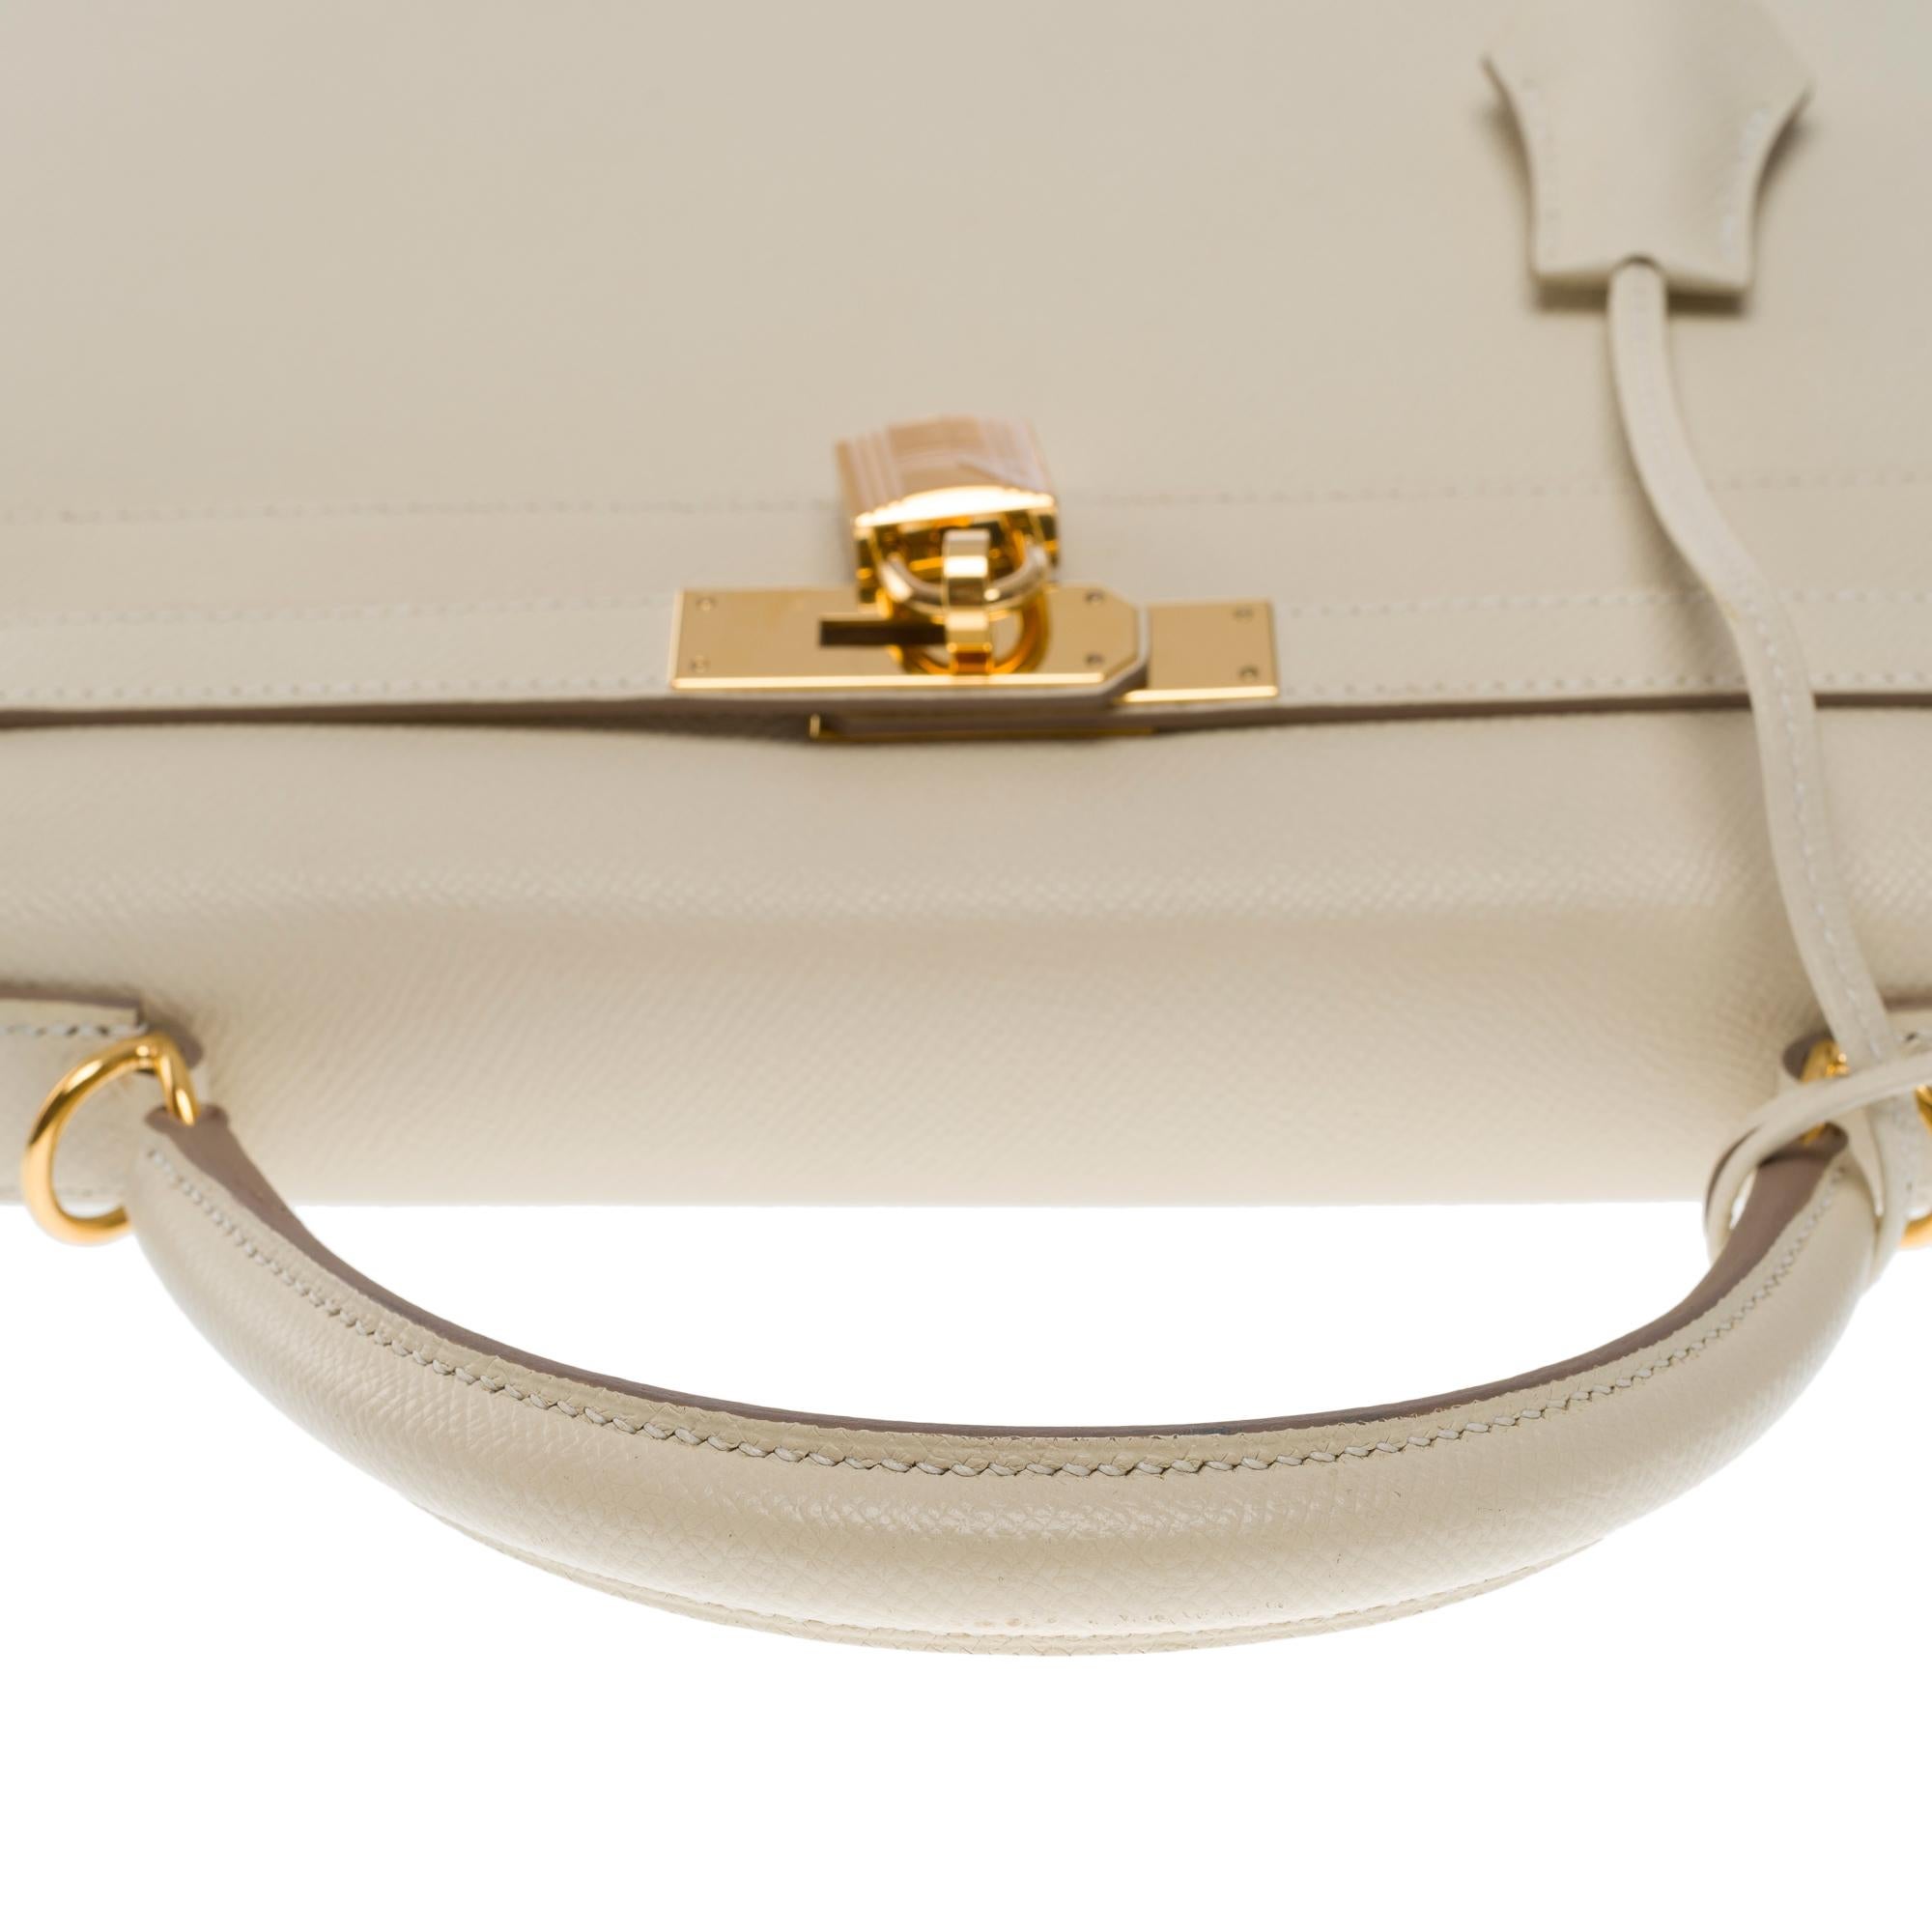 Stunning Hermès Kelly 32 sellier handbag strap in Craie epsom leather, GHW 7